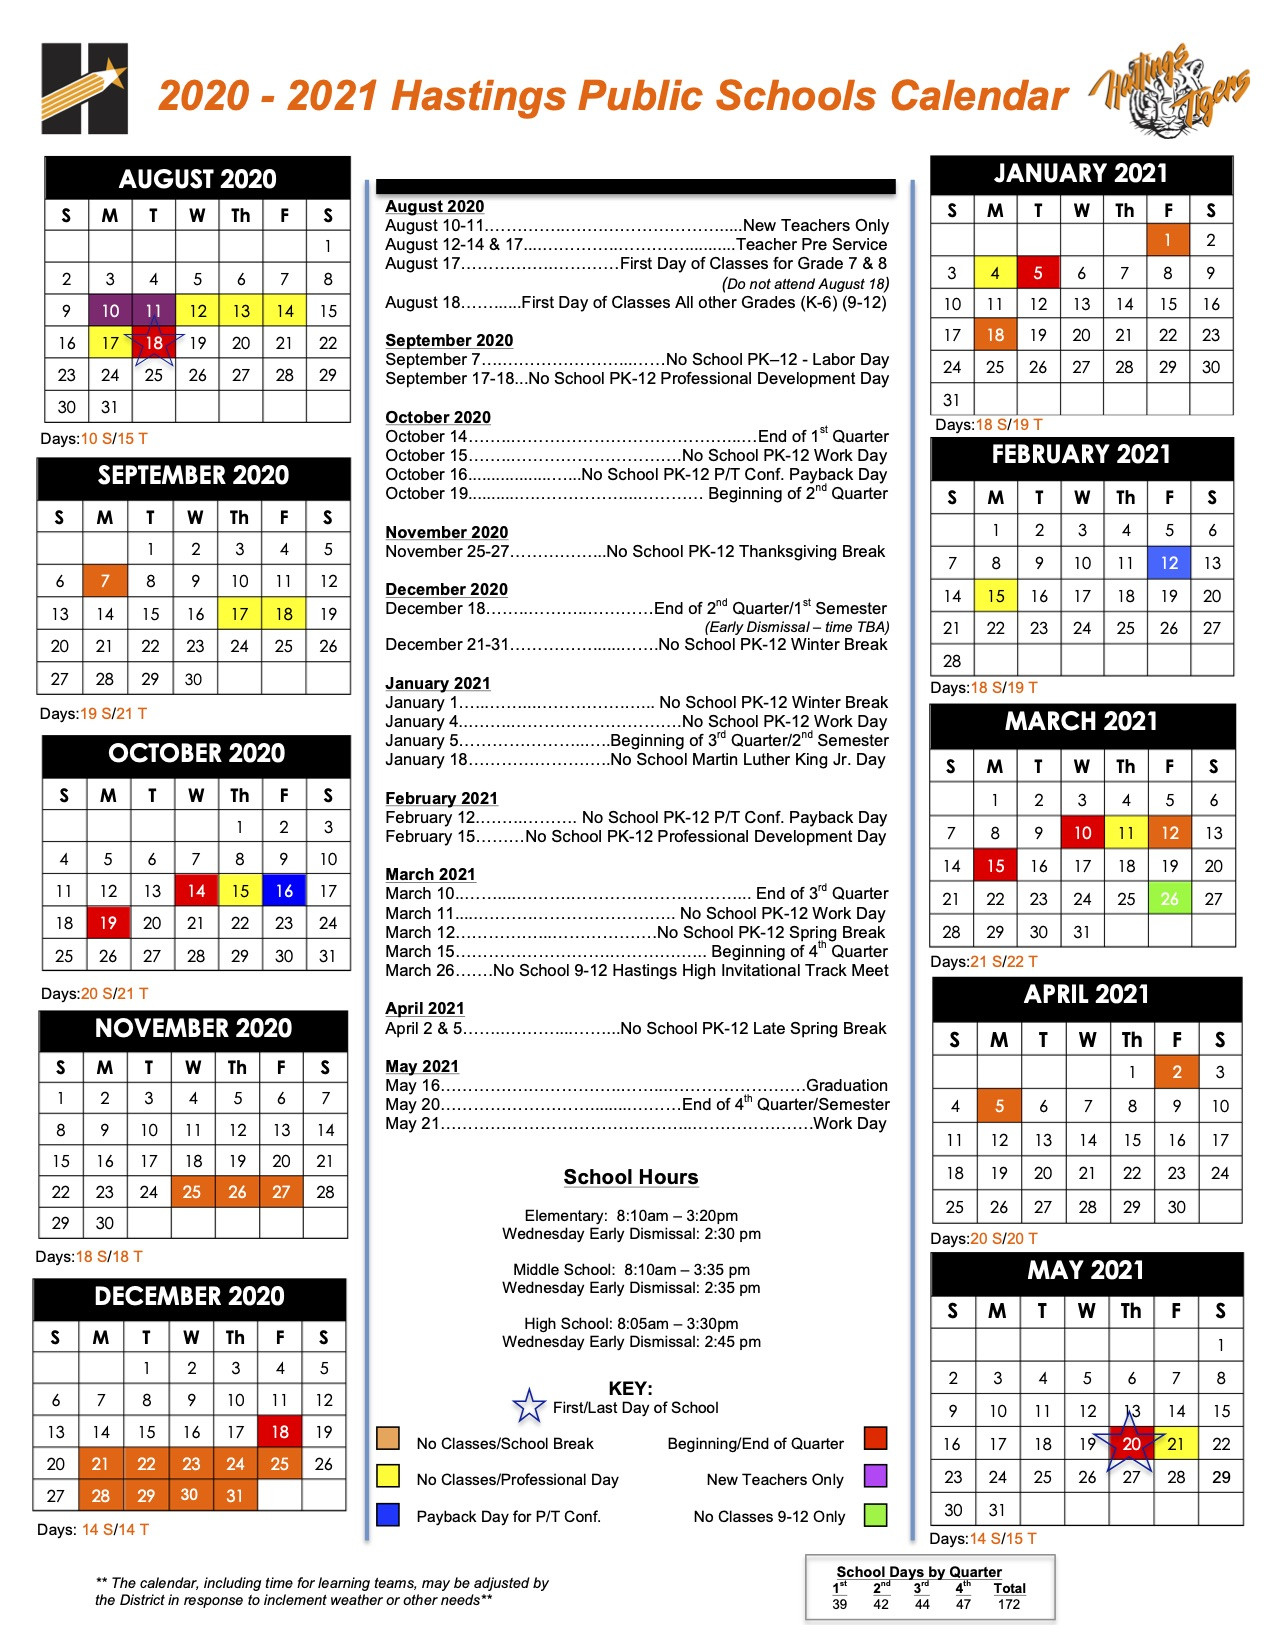 Days Of Attendance Calendar - Hastings Public Schools-Free 2021 Attendance Online Calendar